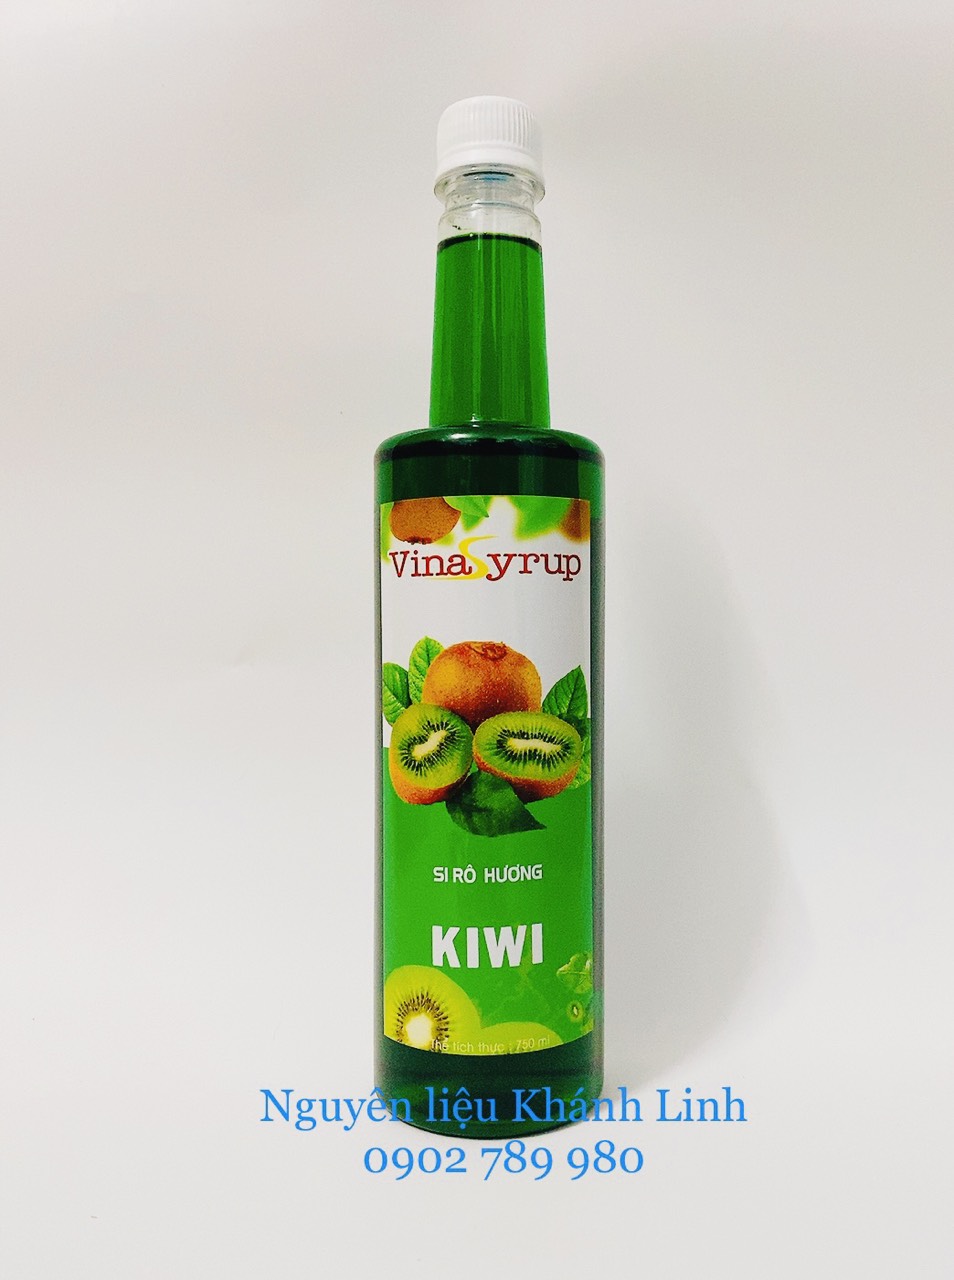 Vinasyrup Kiwi 750ml